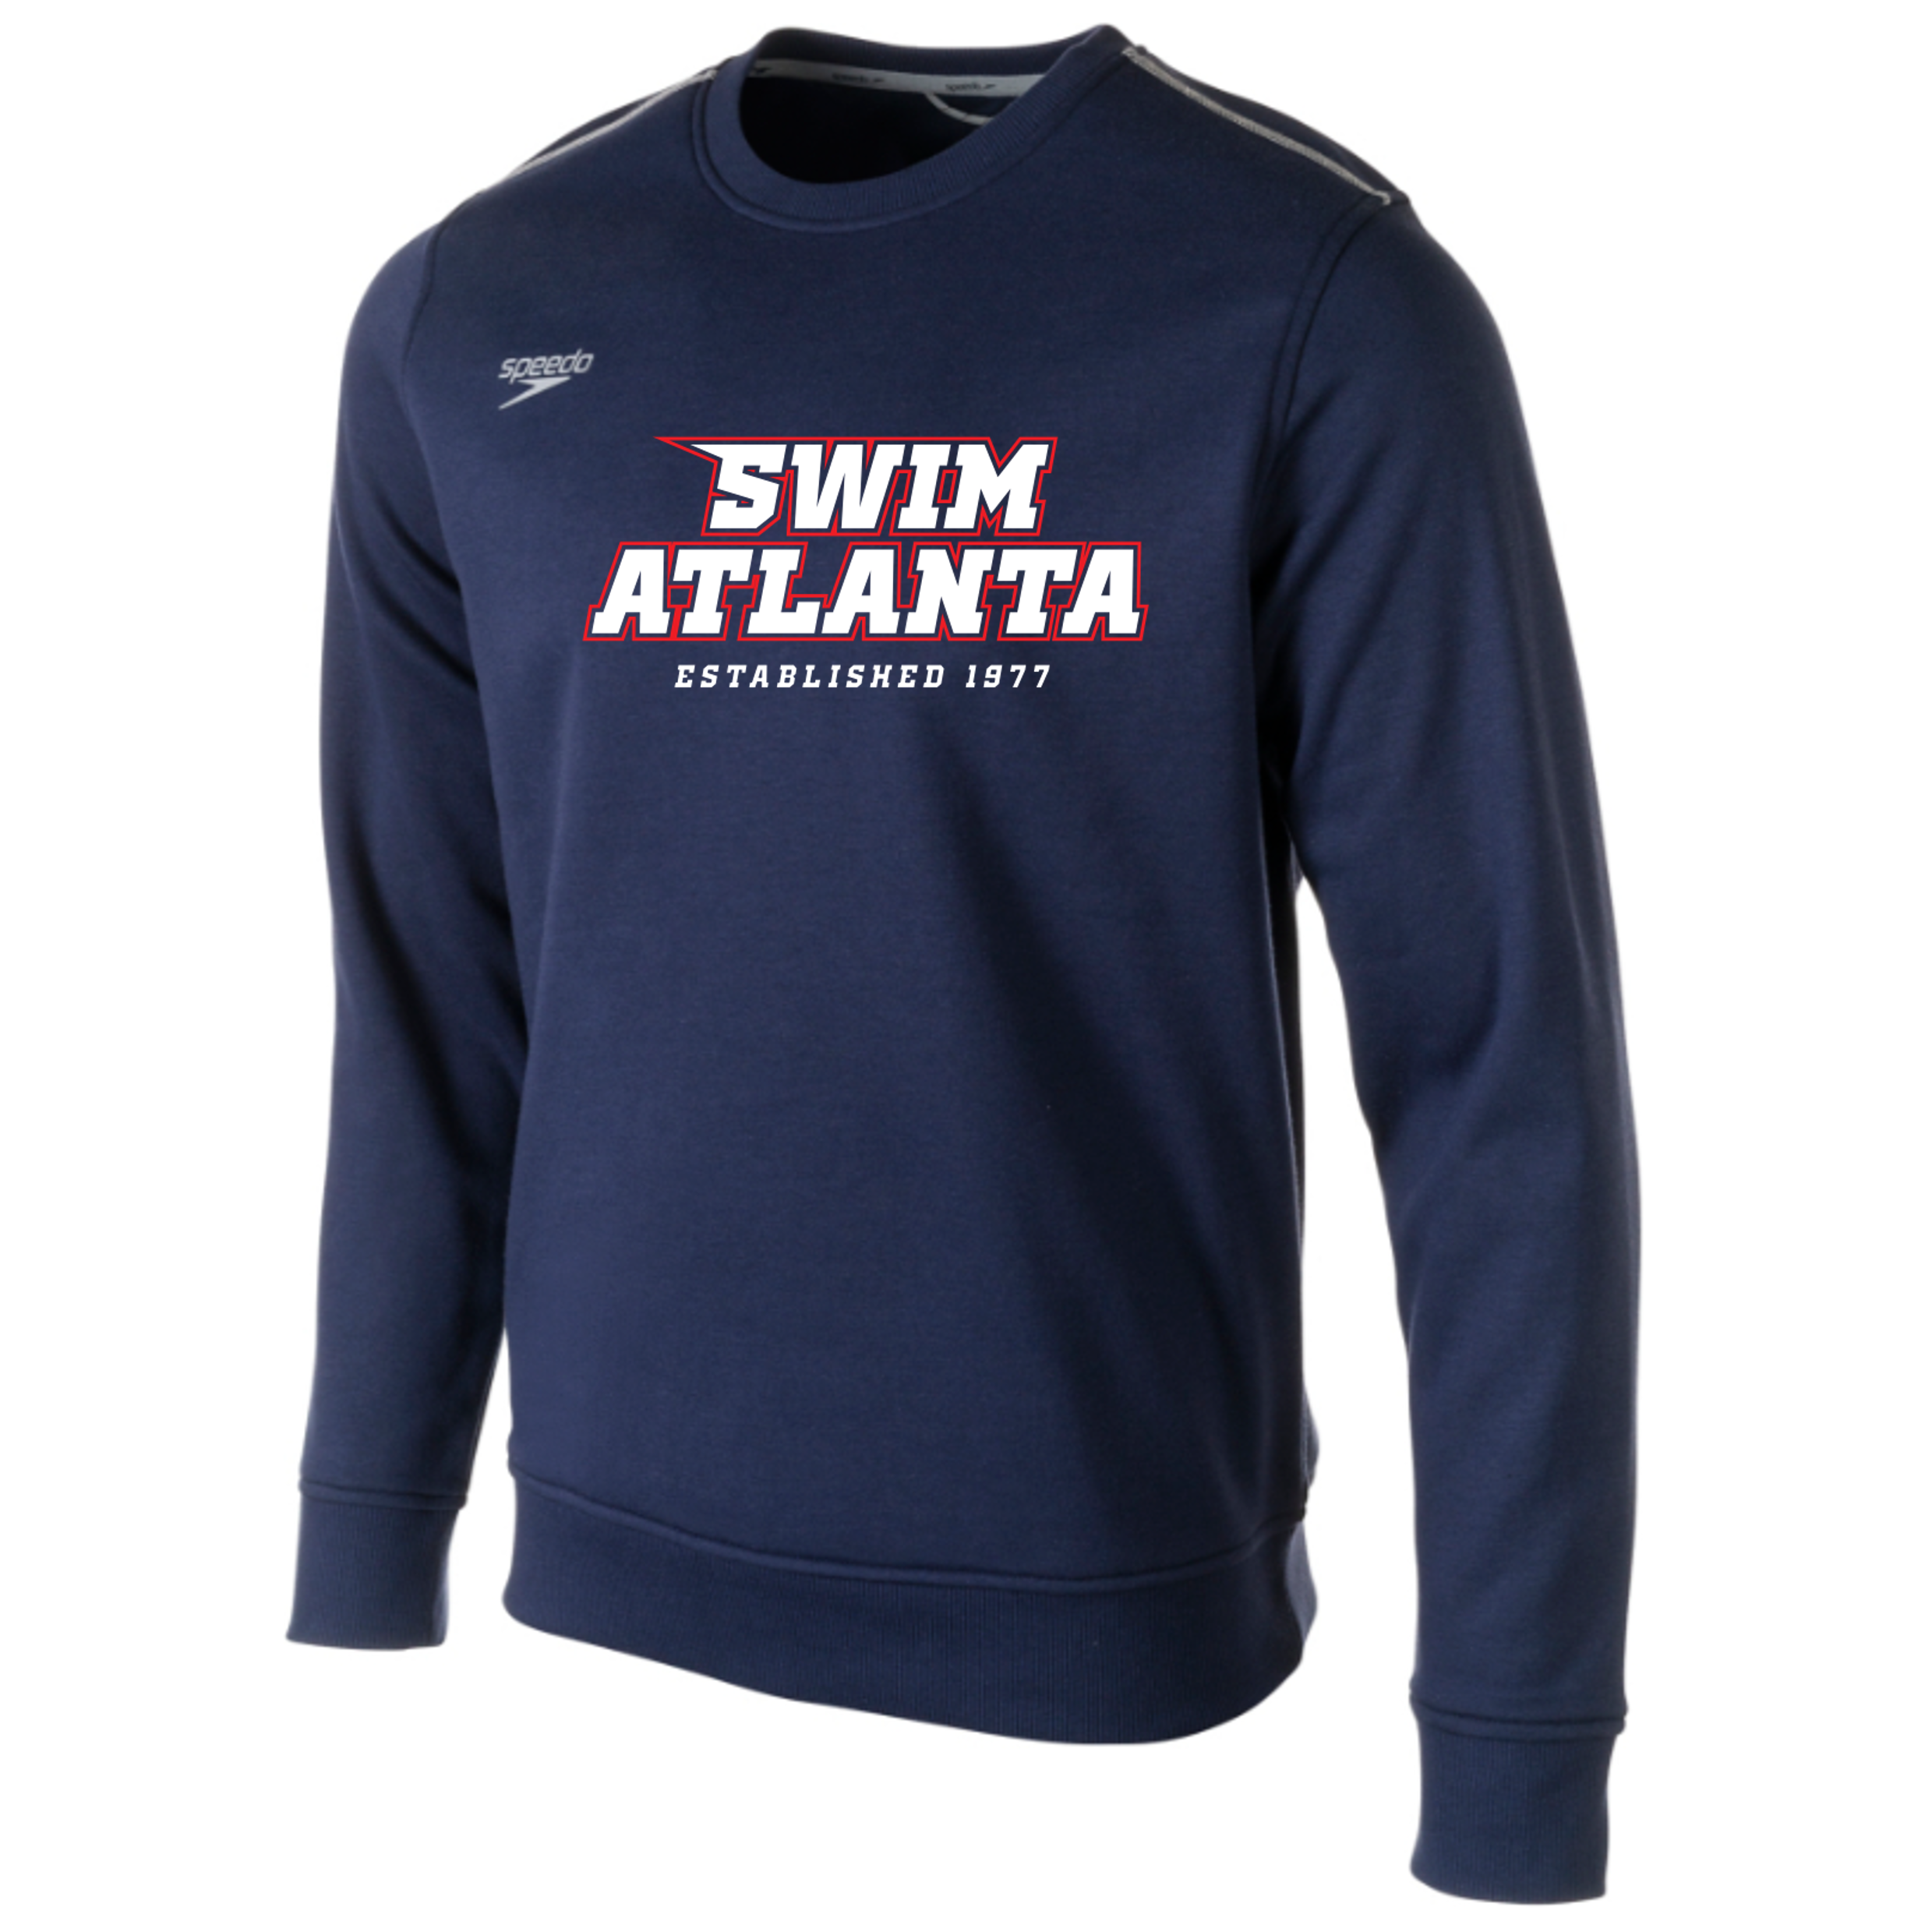 Speedo Fleece Crew Neck Sweatshirt #2 - Swim Atlanta